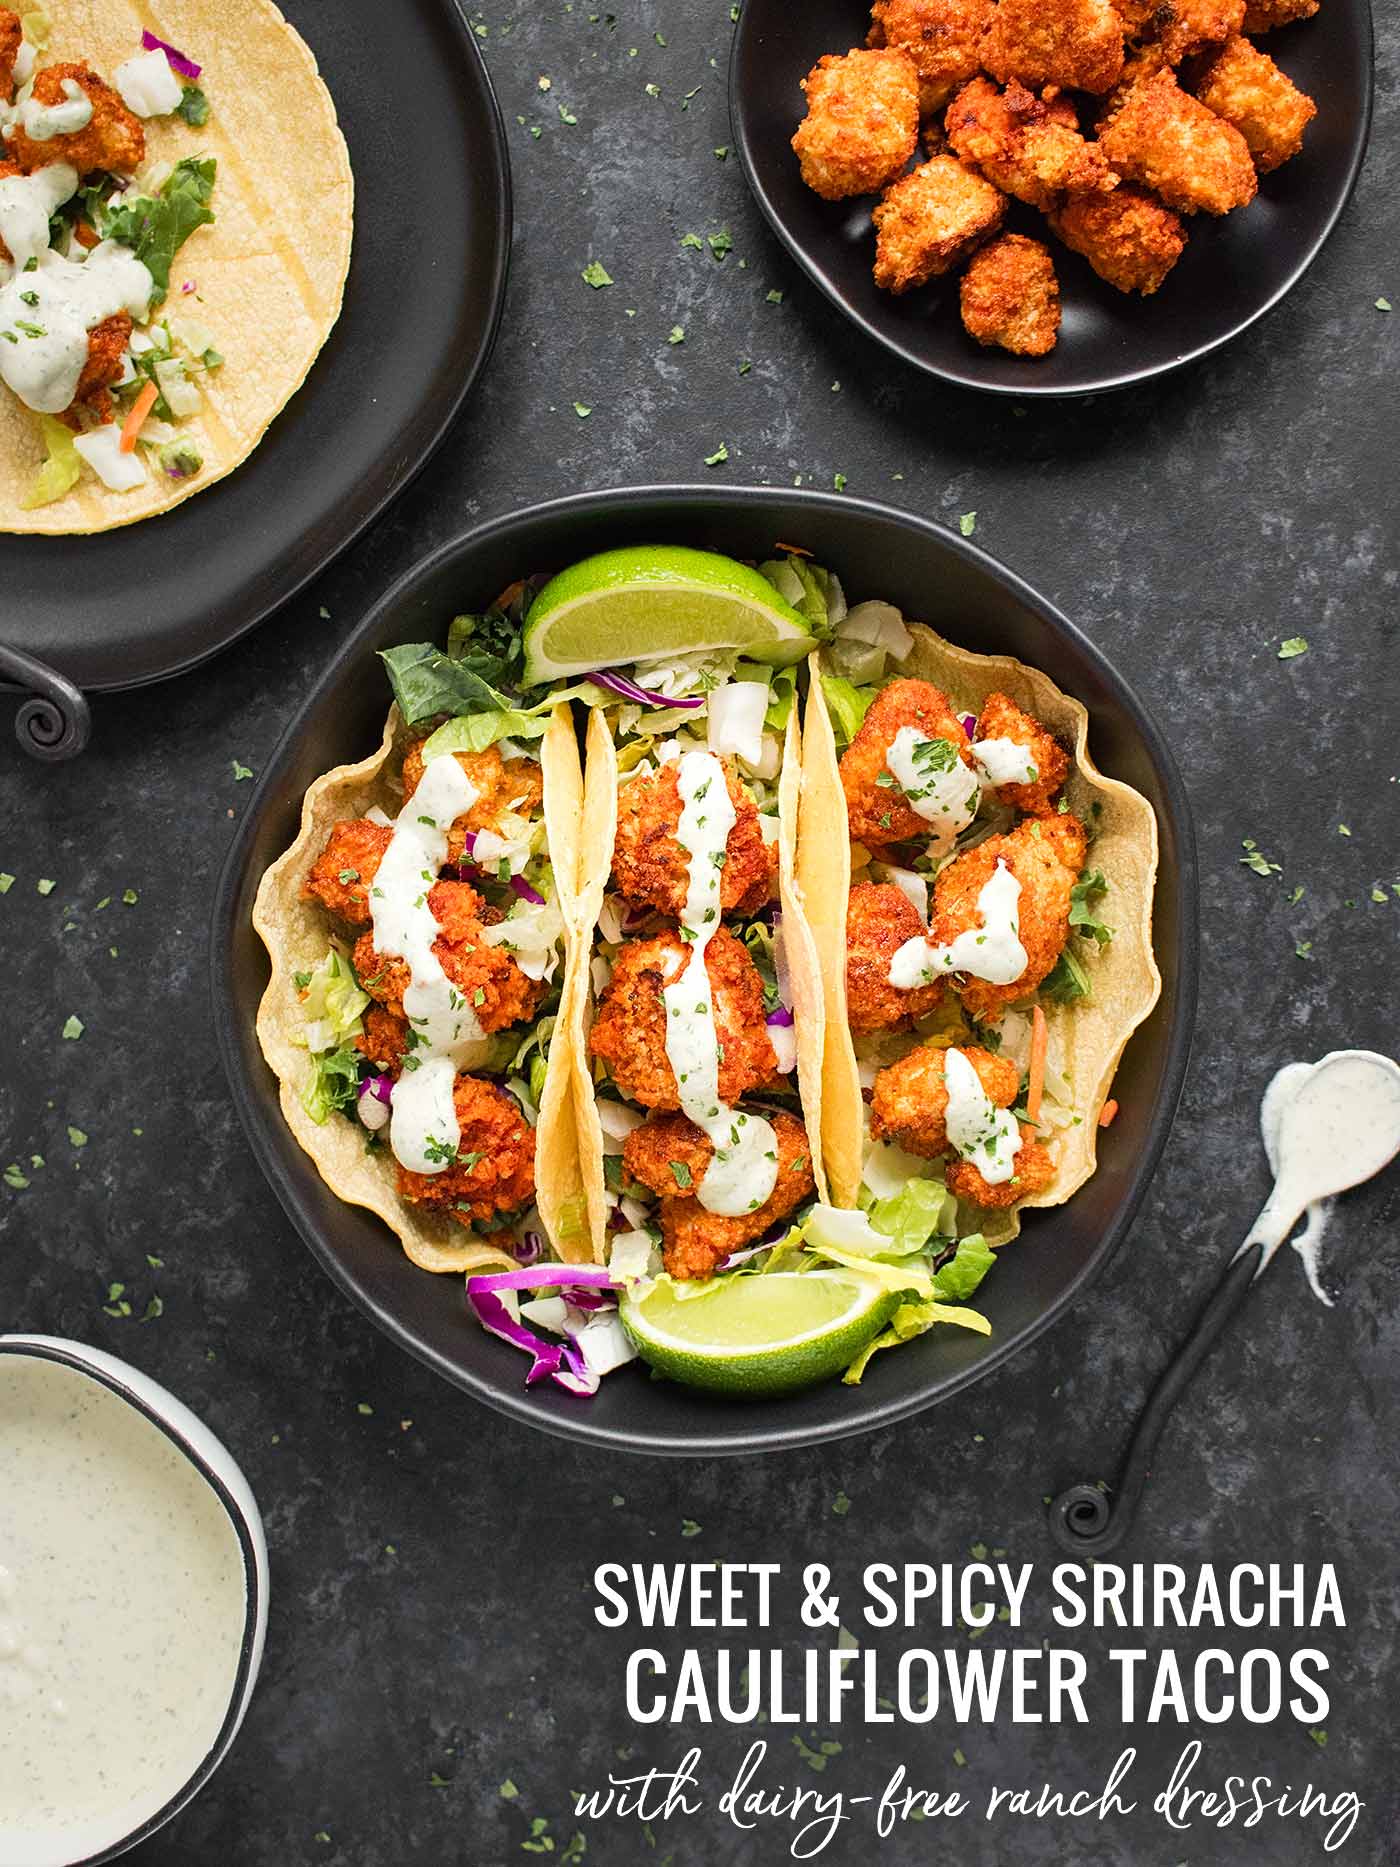 Sweet & Spicy Cauliflower Tacos - Recipe at SoupAddict.com